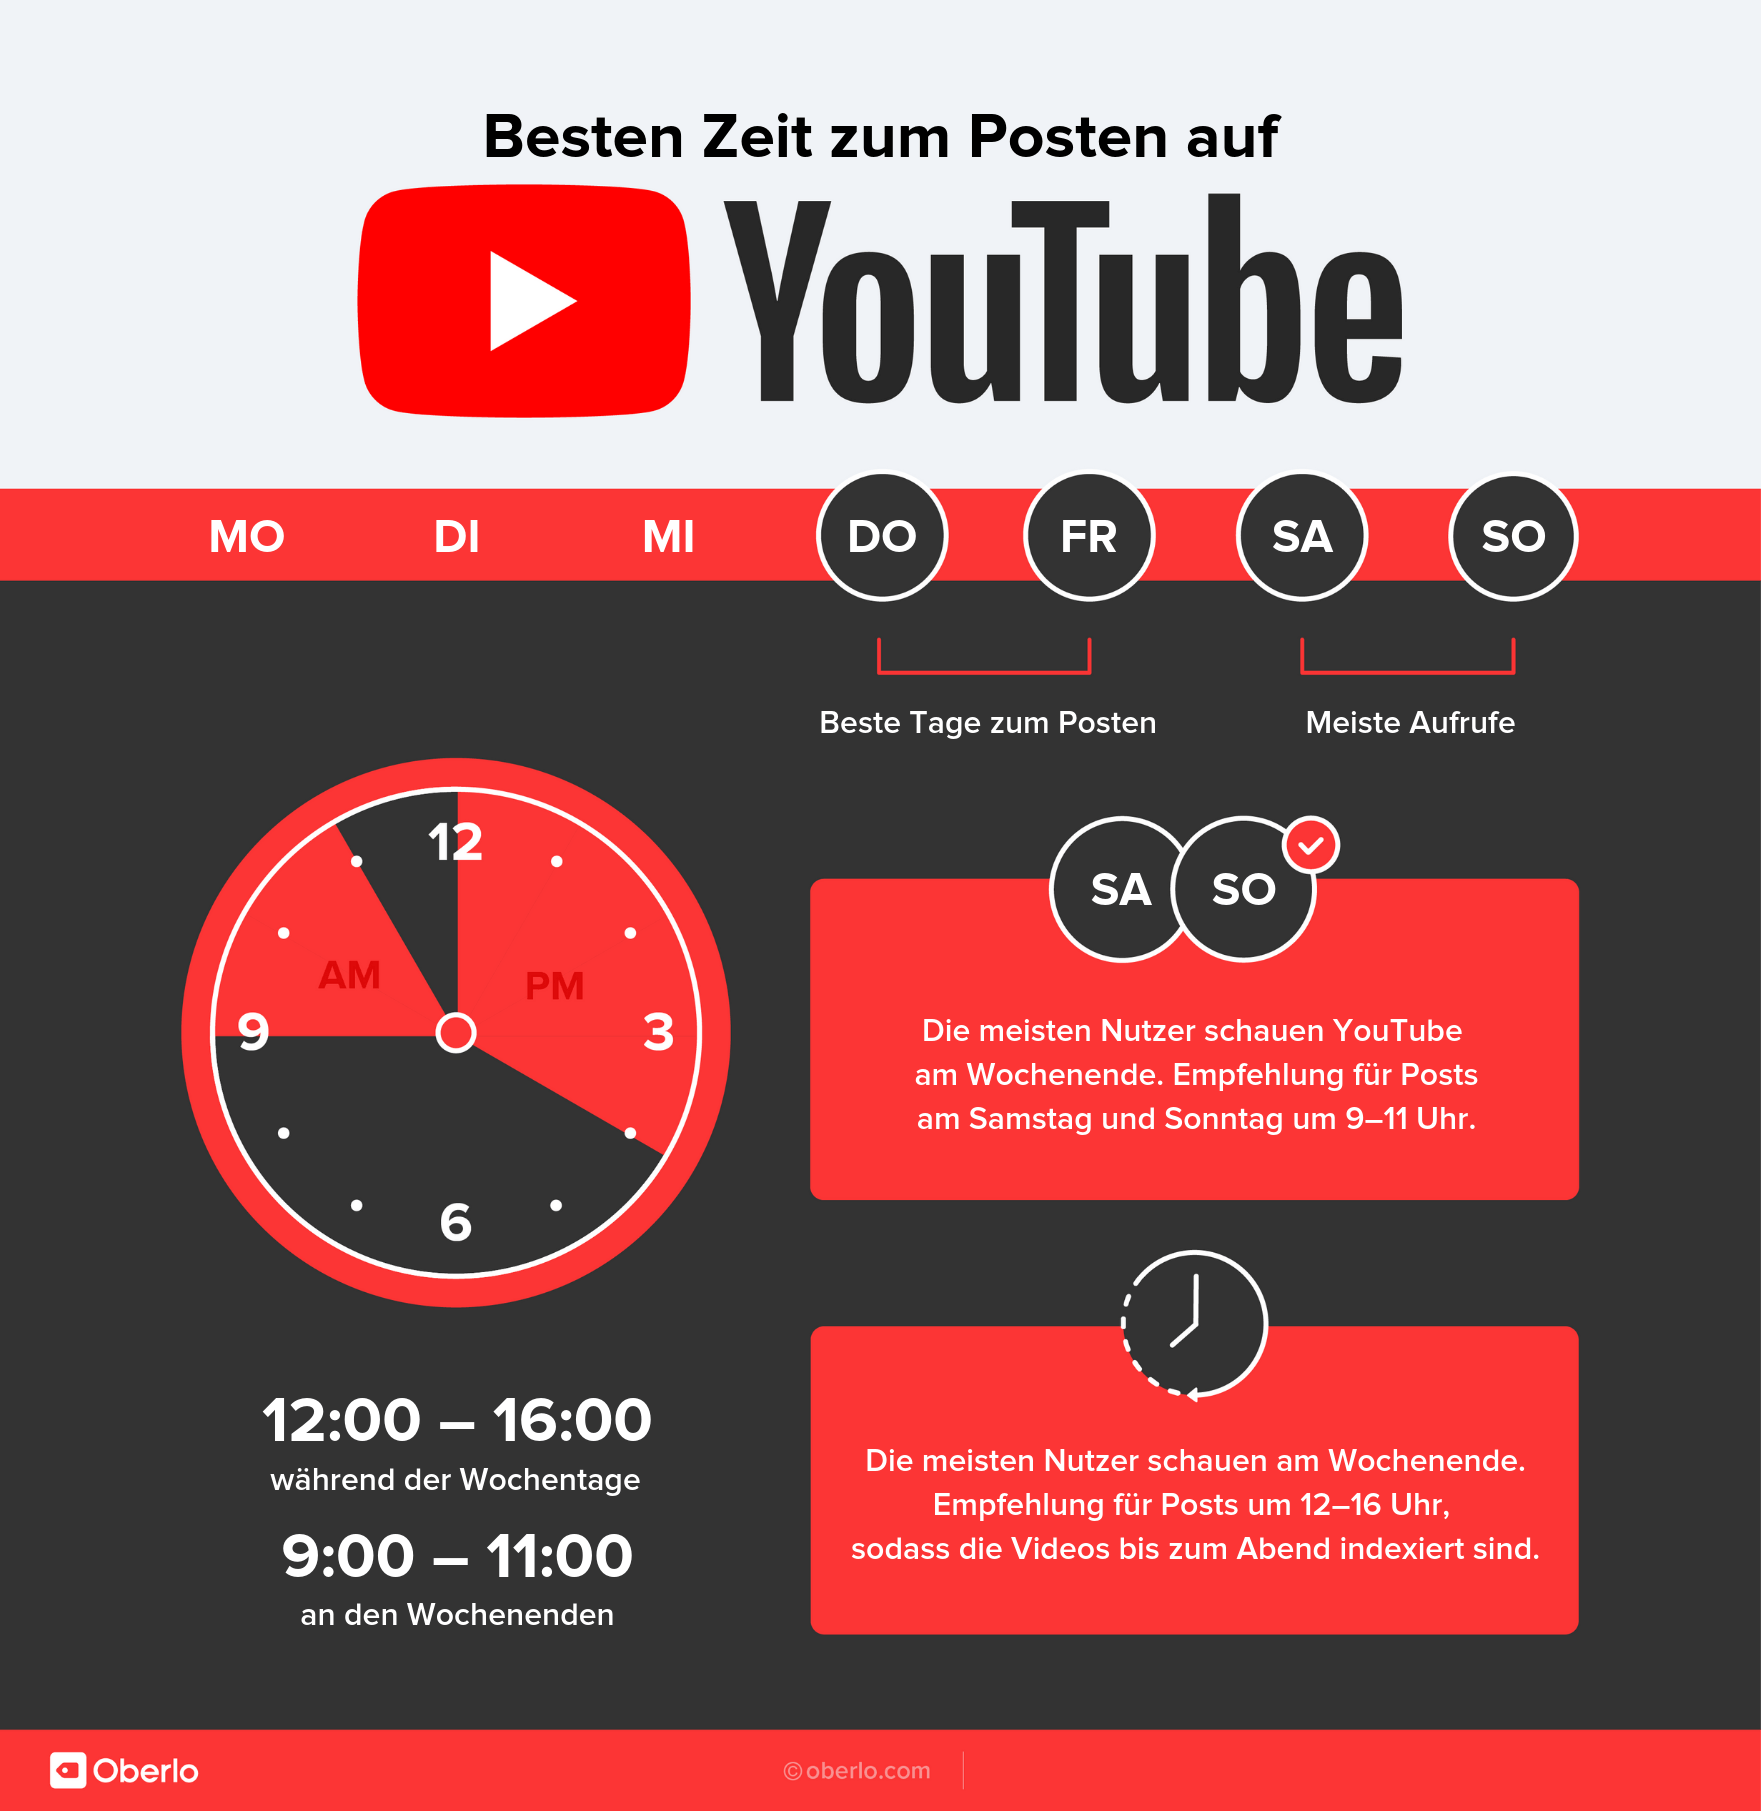 Beste Zeit zum Posten - YouTube Infografik